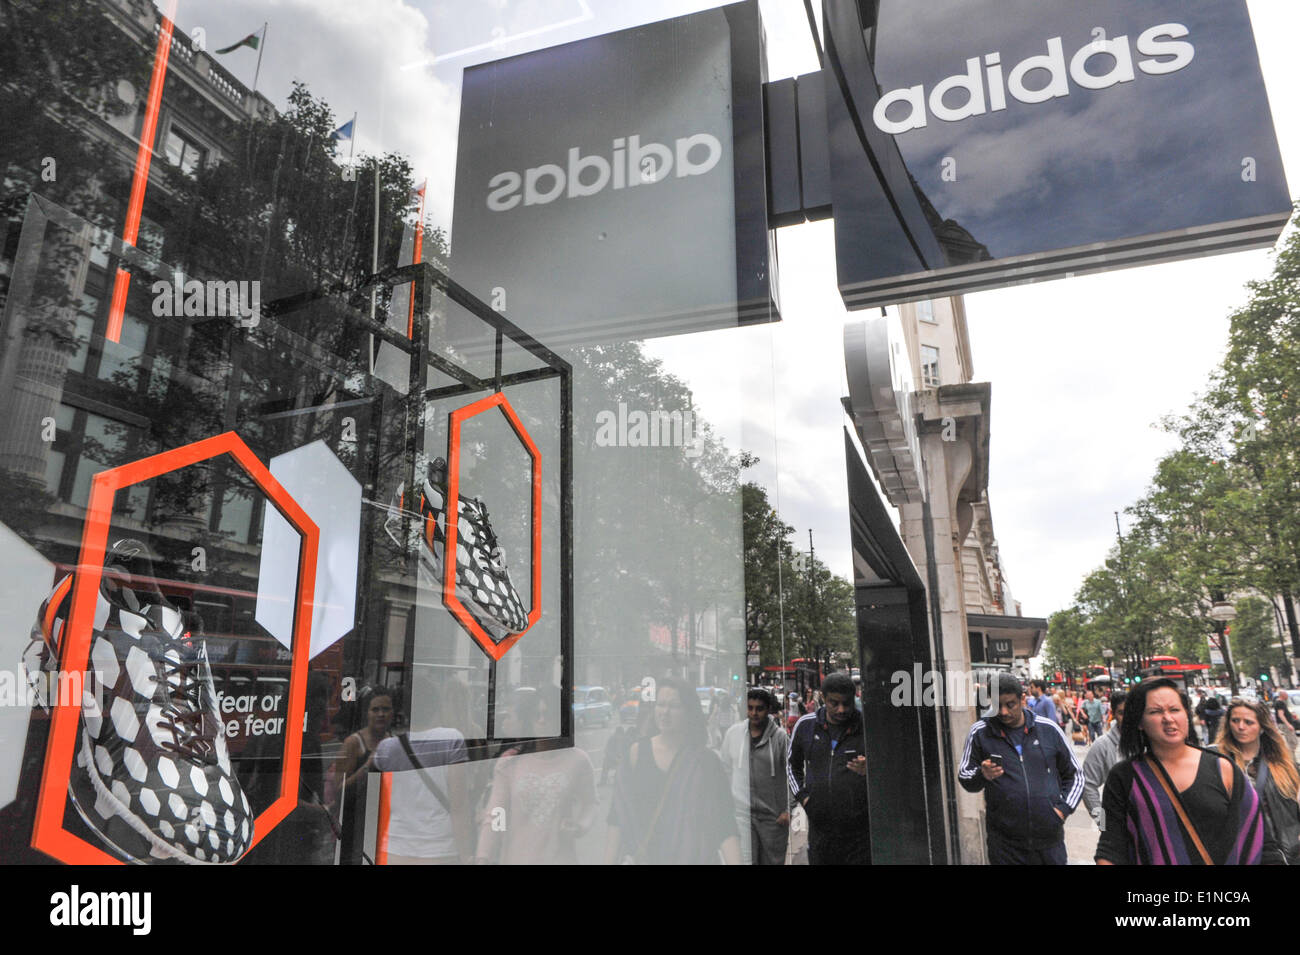 adidas stores around the world